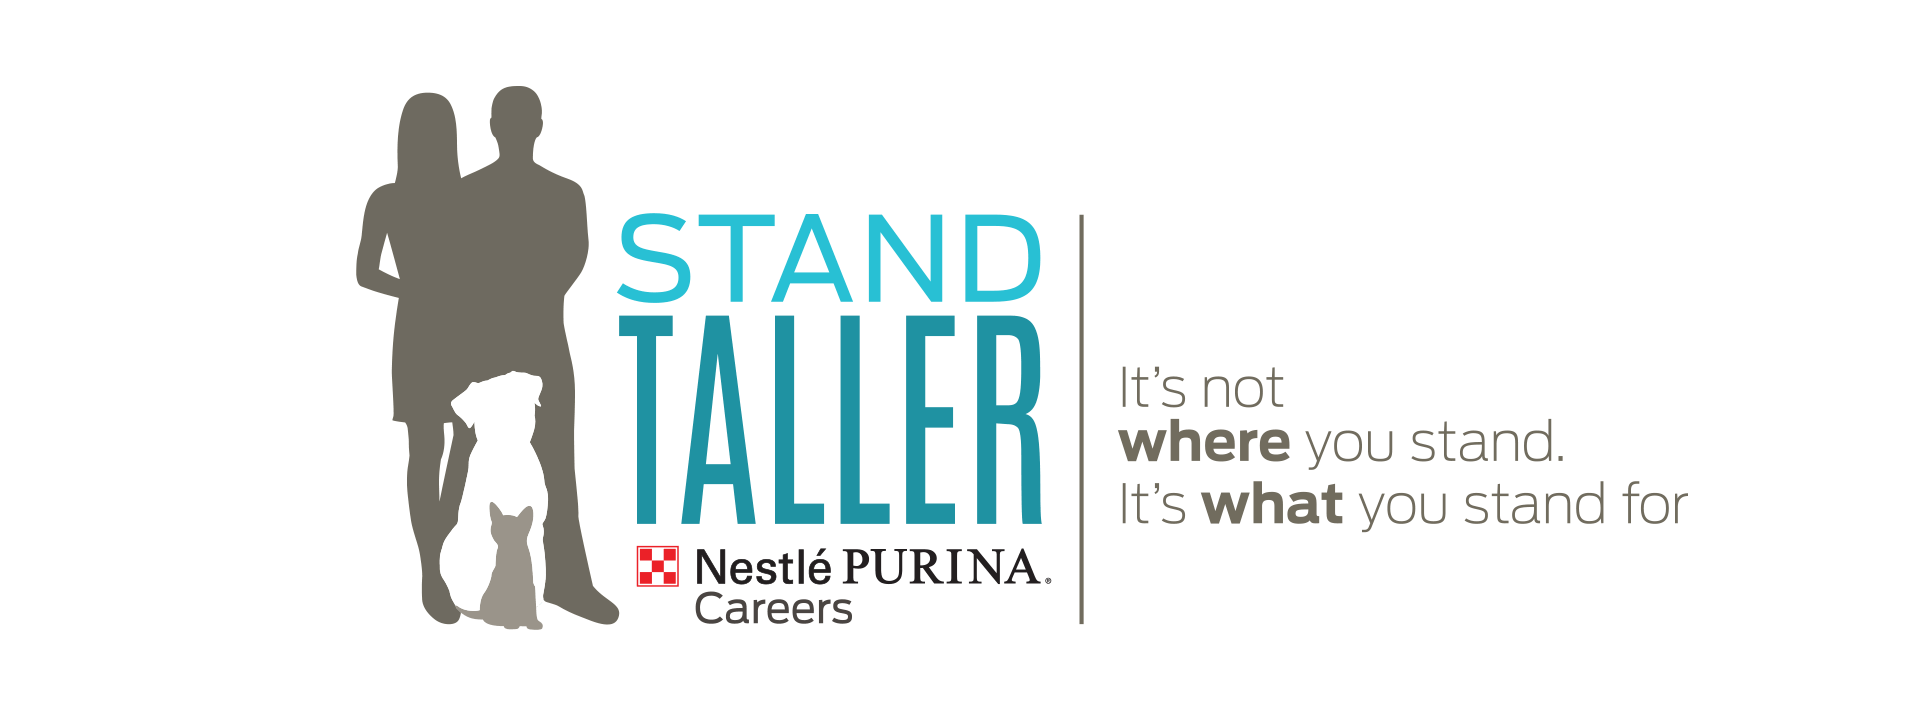 Nestle Brand Logo - Stand Taller Logo | Toolkit: Nestlé Purina PetCare Careers